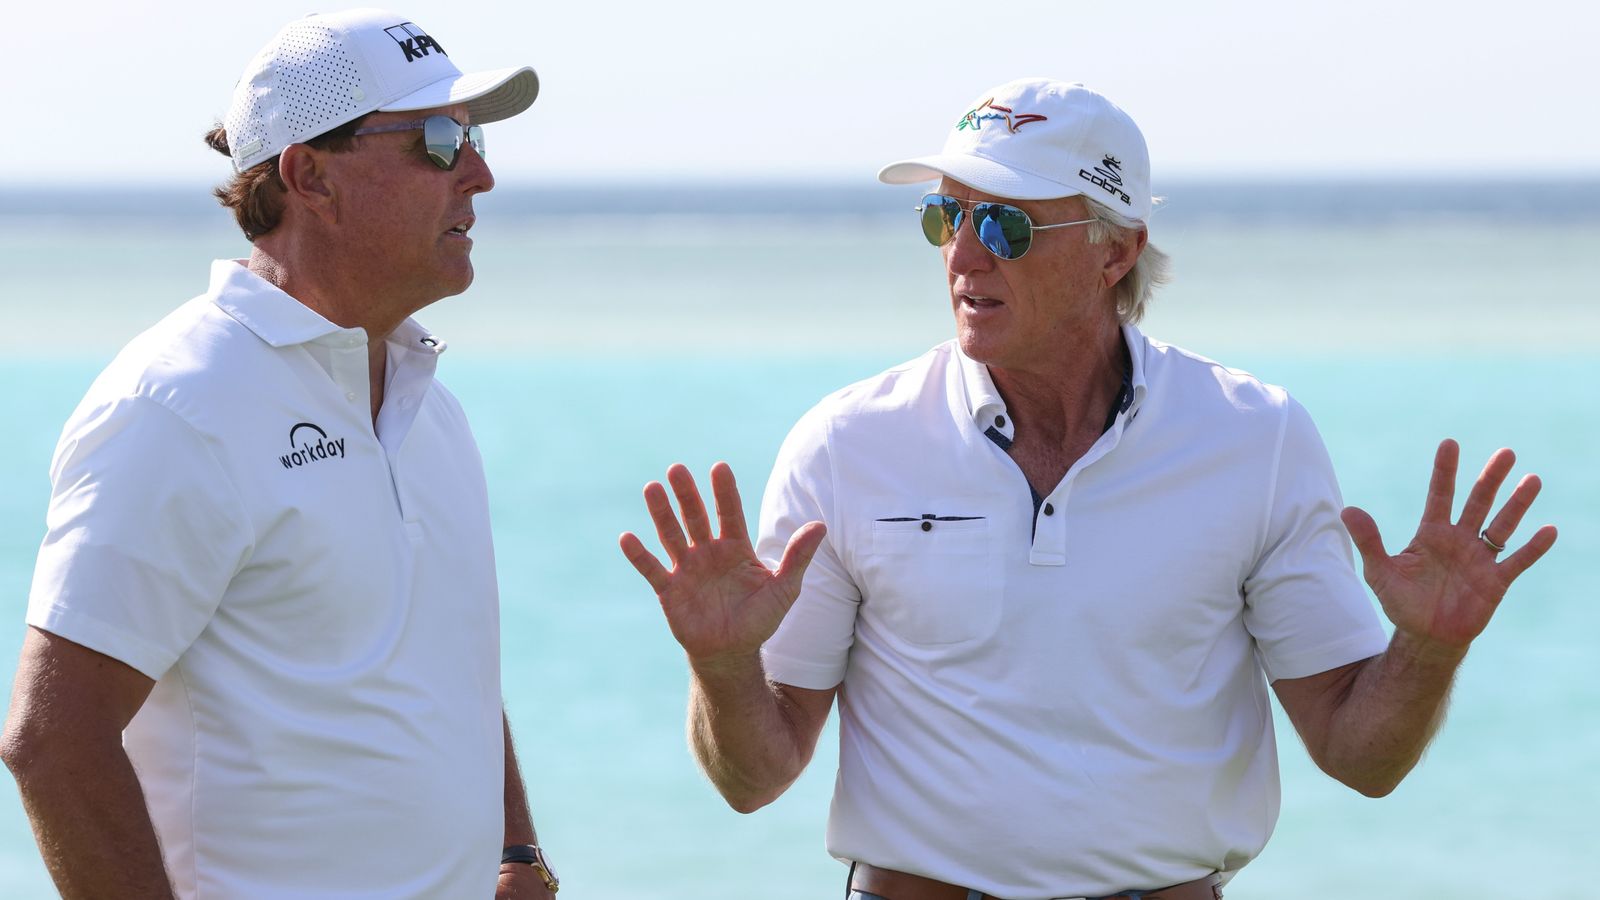 Greg Norman LIV Golf CEO brands PGA Tour after